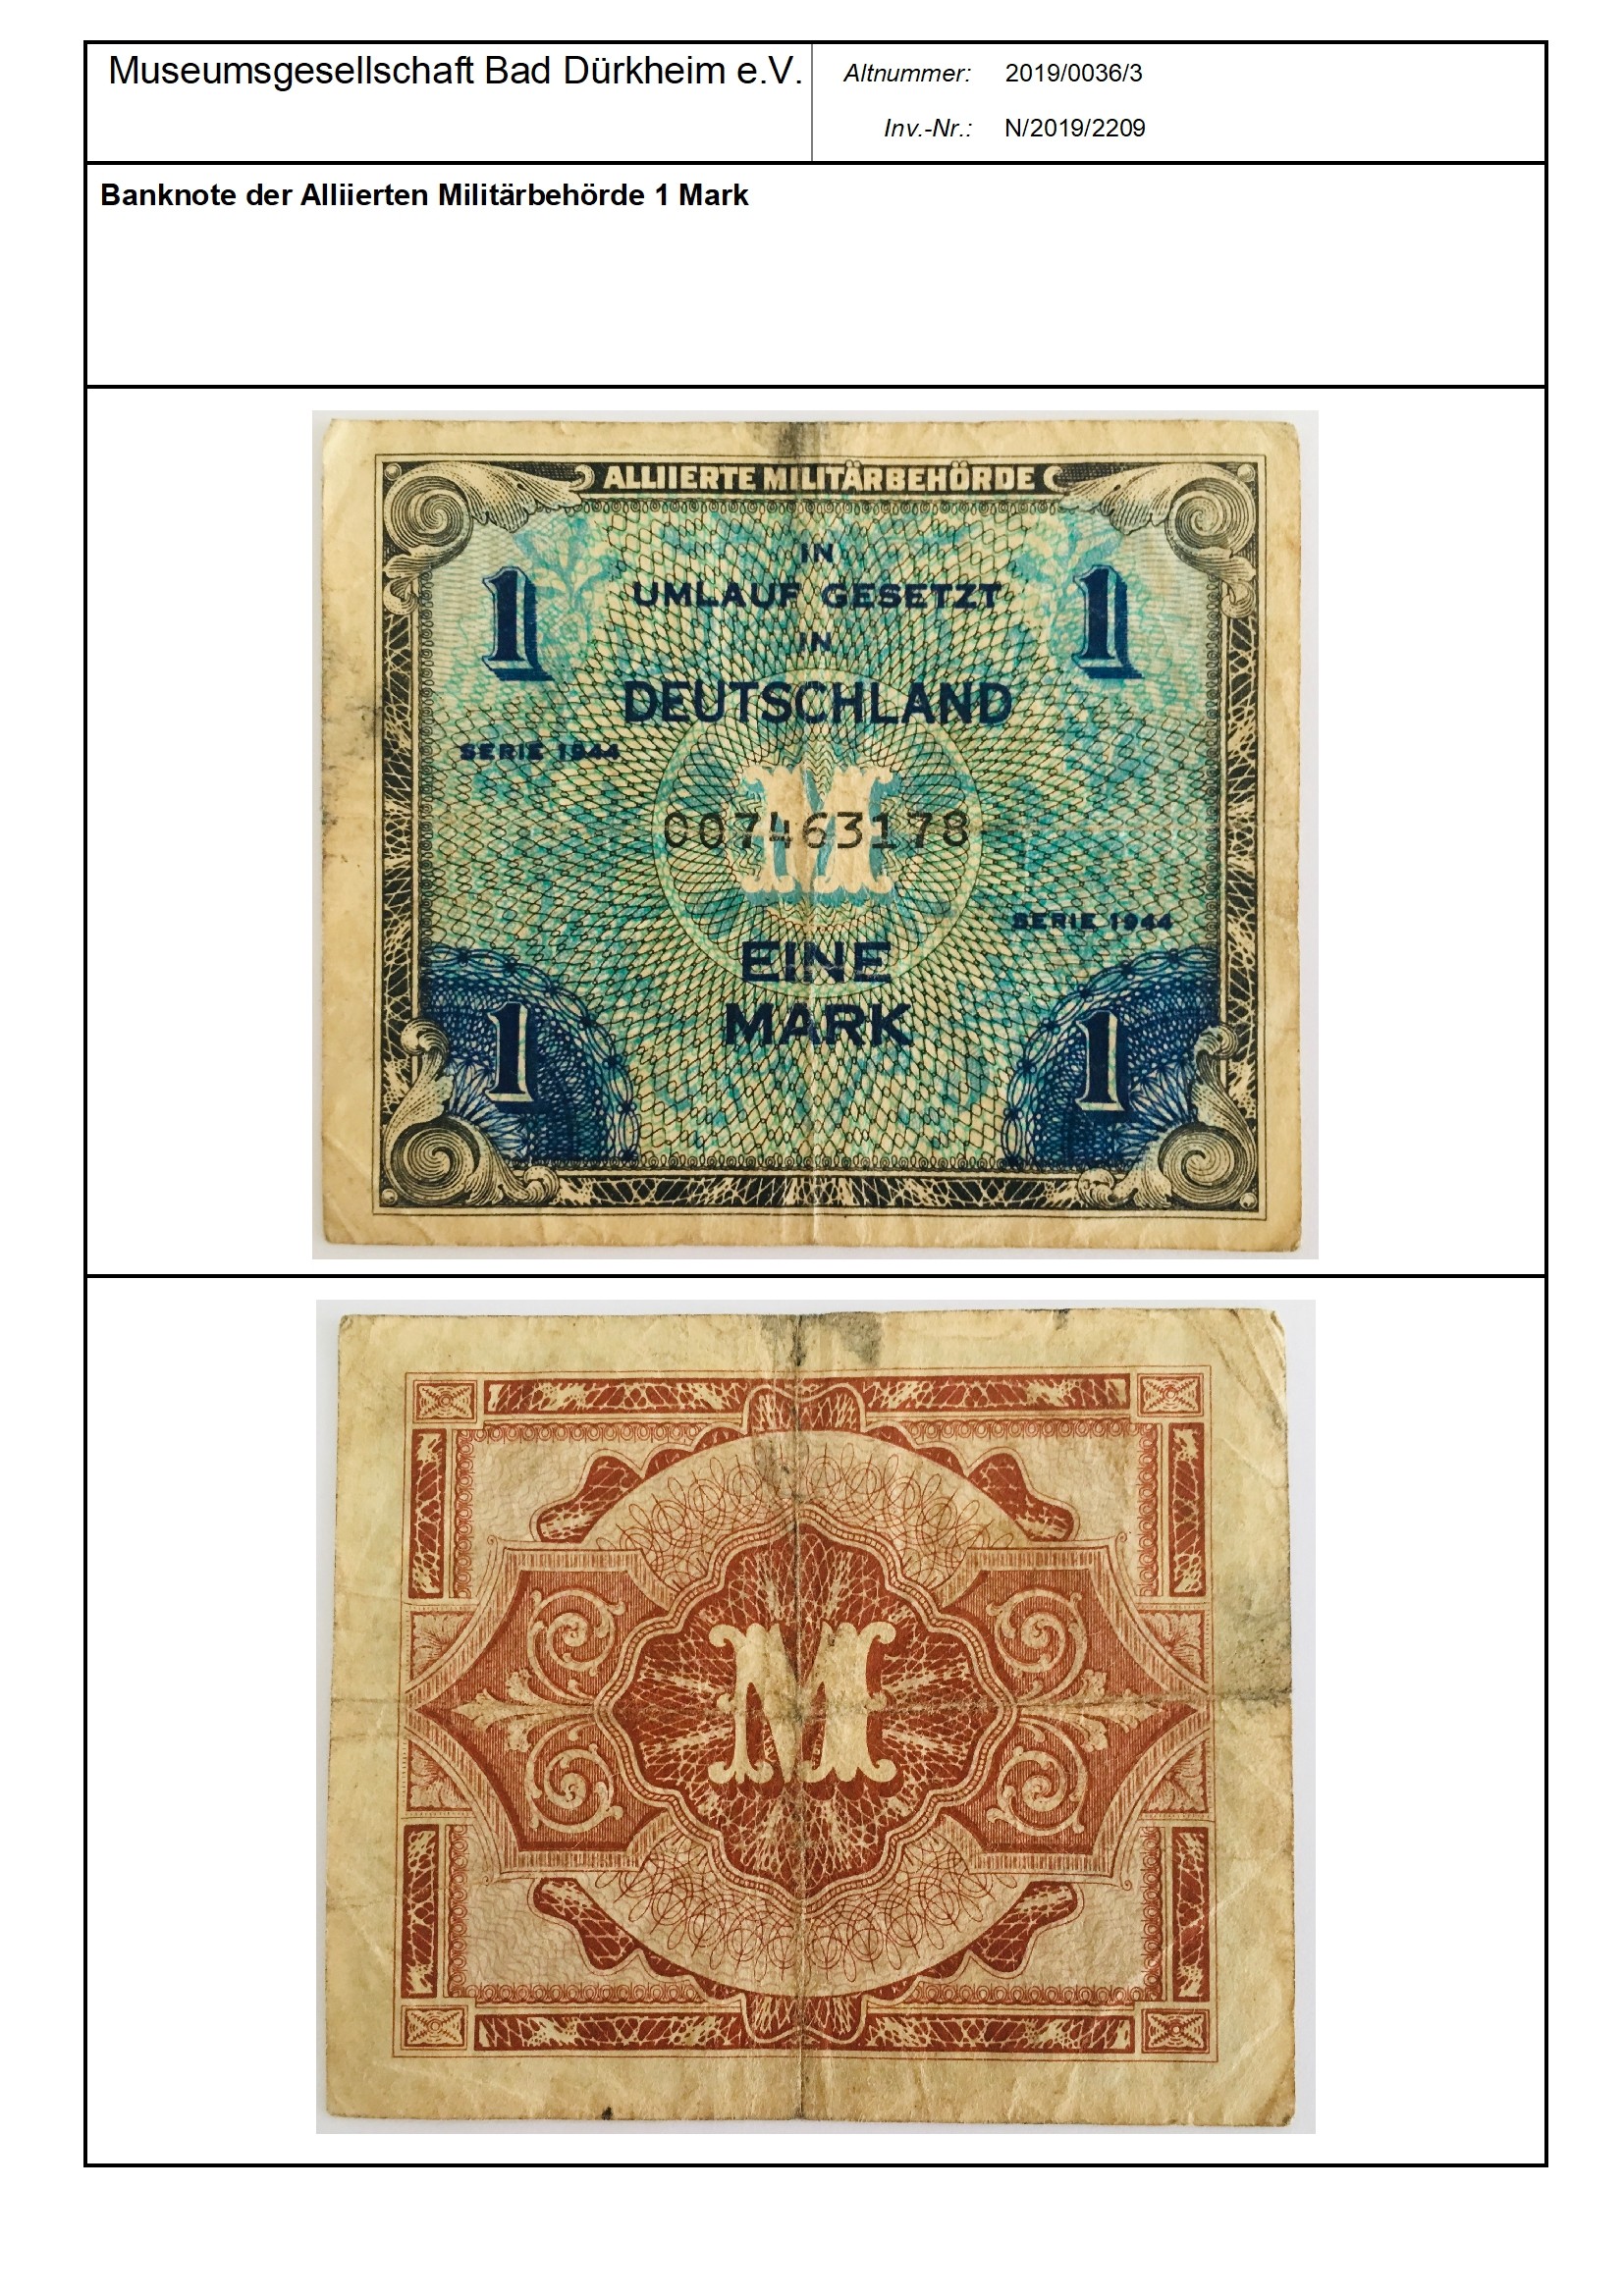 Banknote der Alliierten Militärbehörde 1 Mark
Serien-Nummer: 007463178 (Museumsgesellschaft Bad Dürkheim e.V. CC BY-NC-SA)